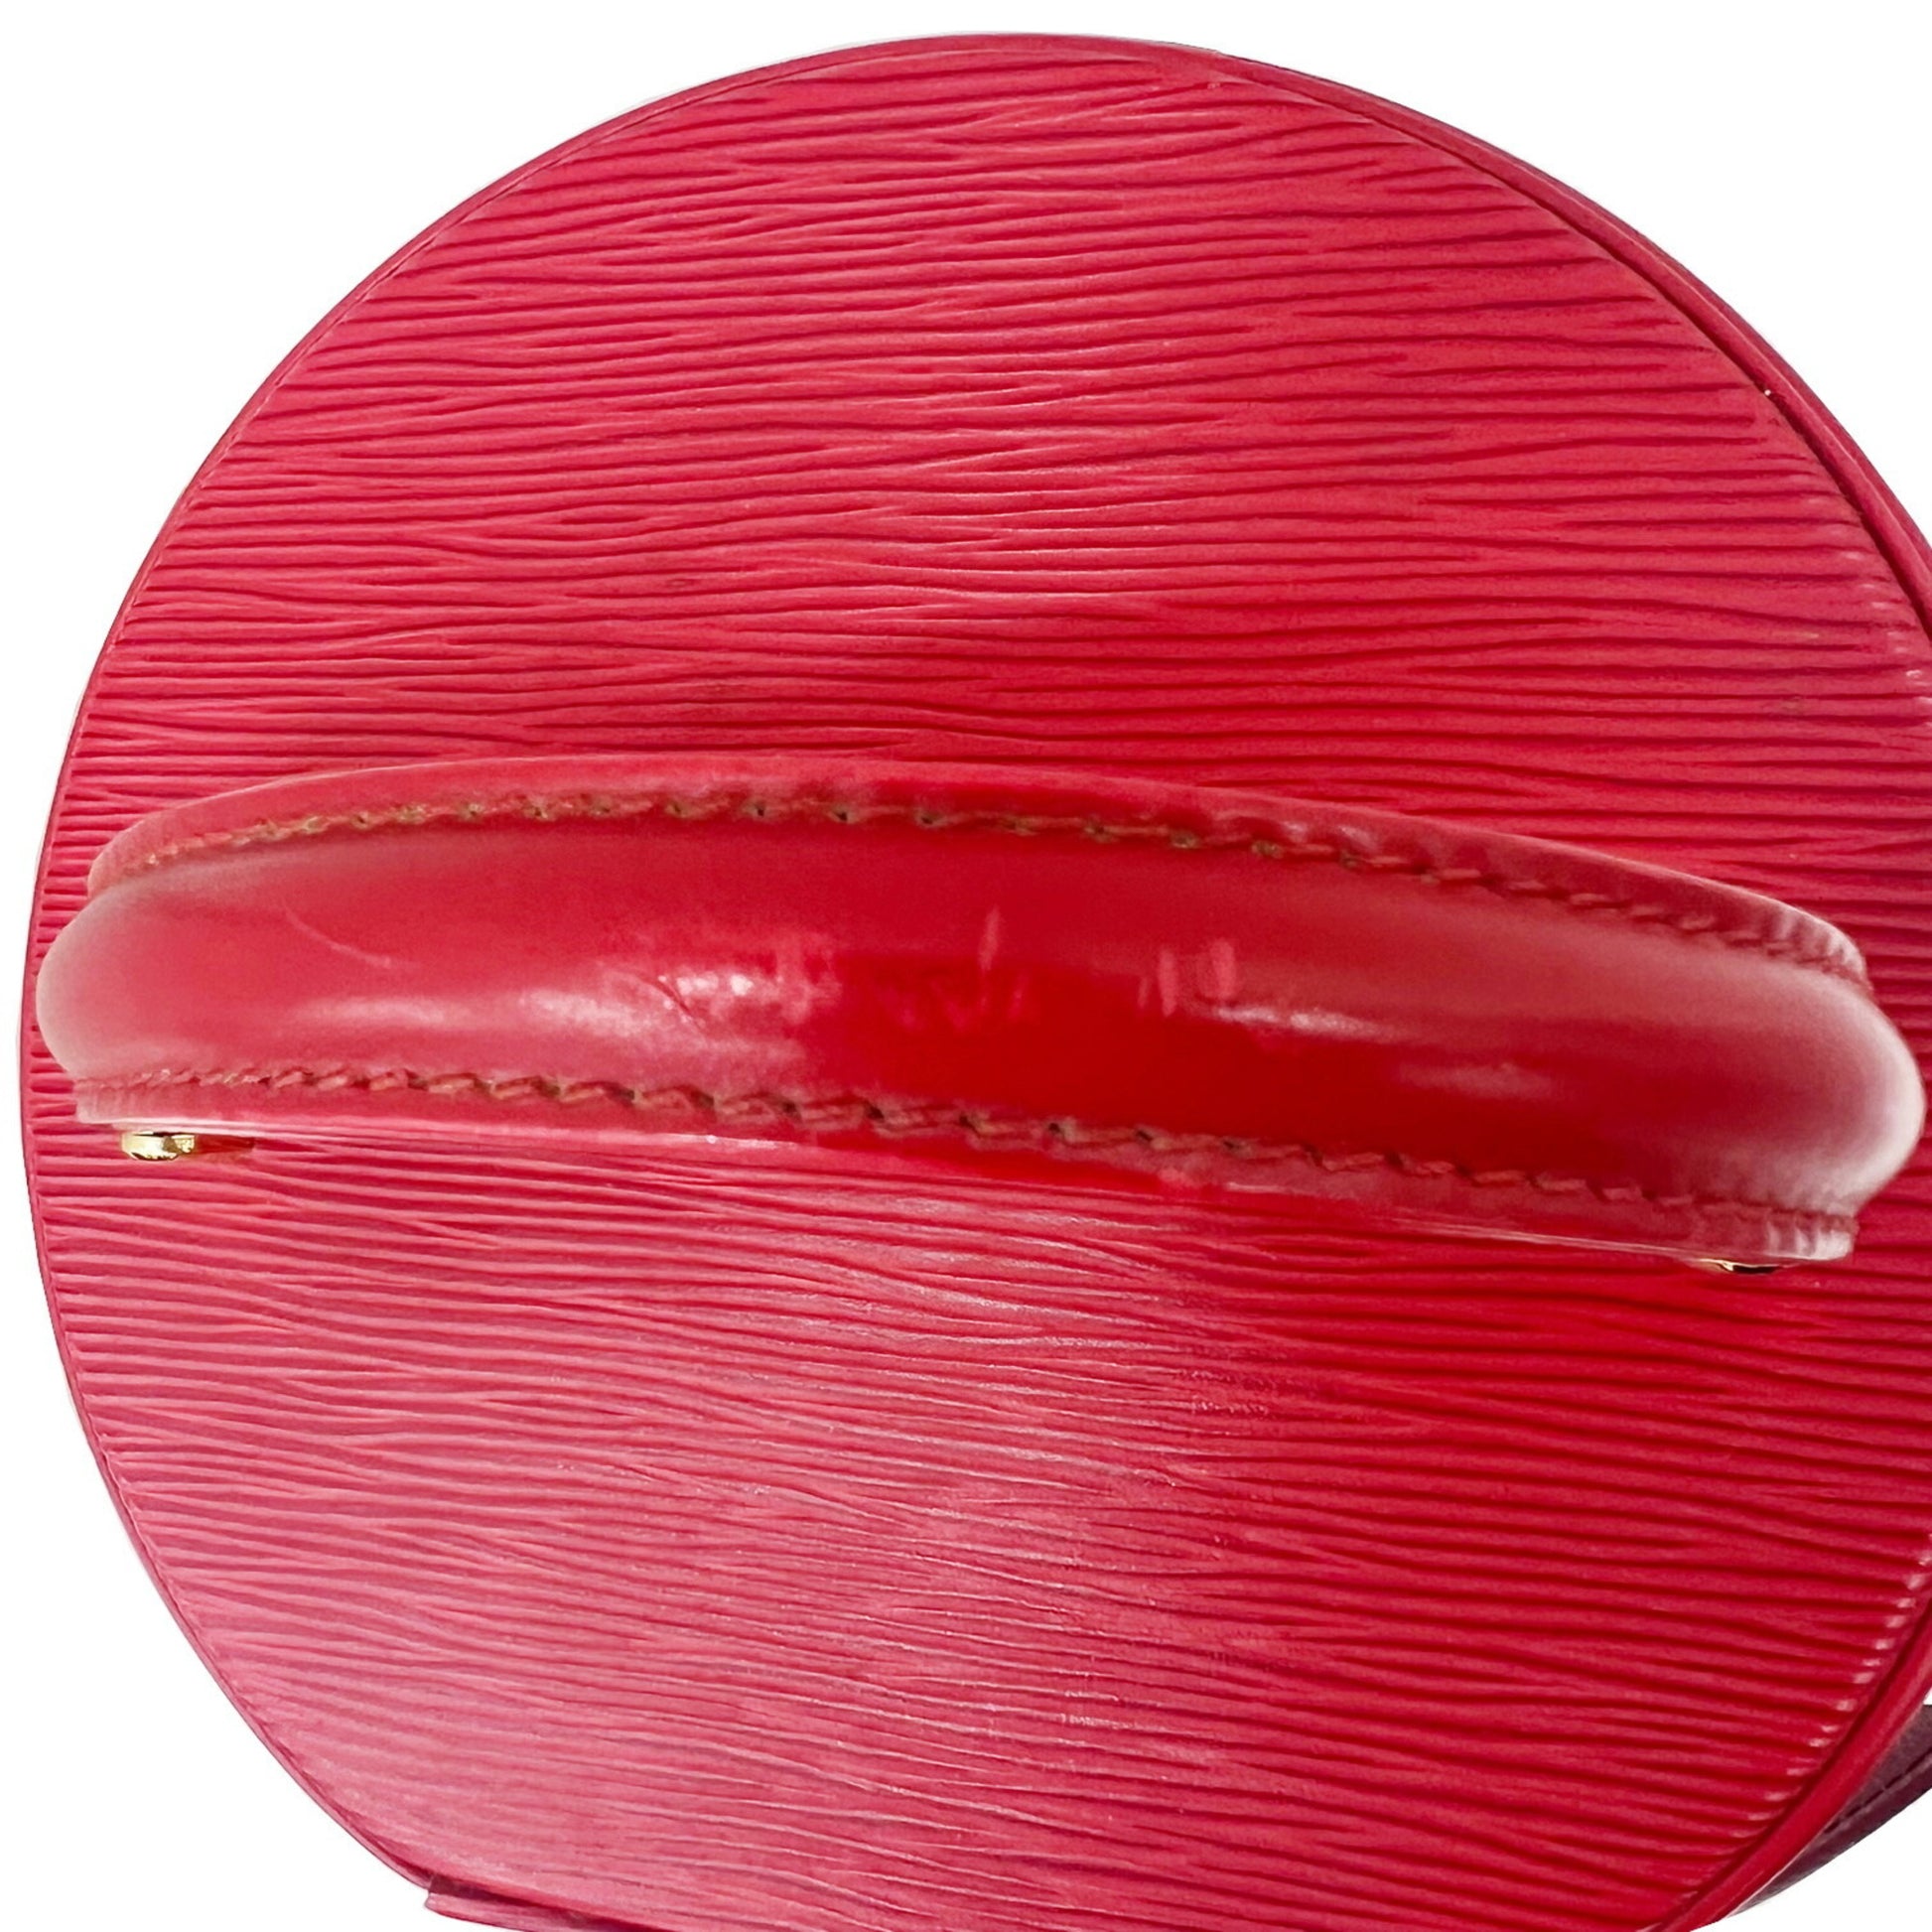 LOUIS VUITTON LOUIS VUITTON Cannes Handbag M48037 Epi leather canvas Red  Used unisex LV M48037｜Product Code：2101216357358｜BRAND OFF Online Store